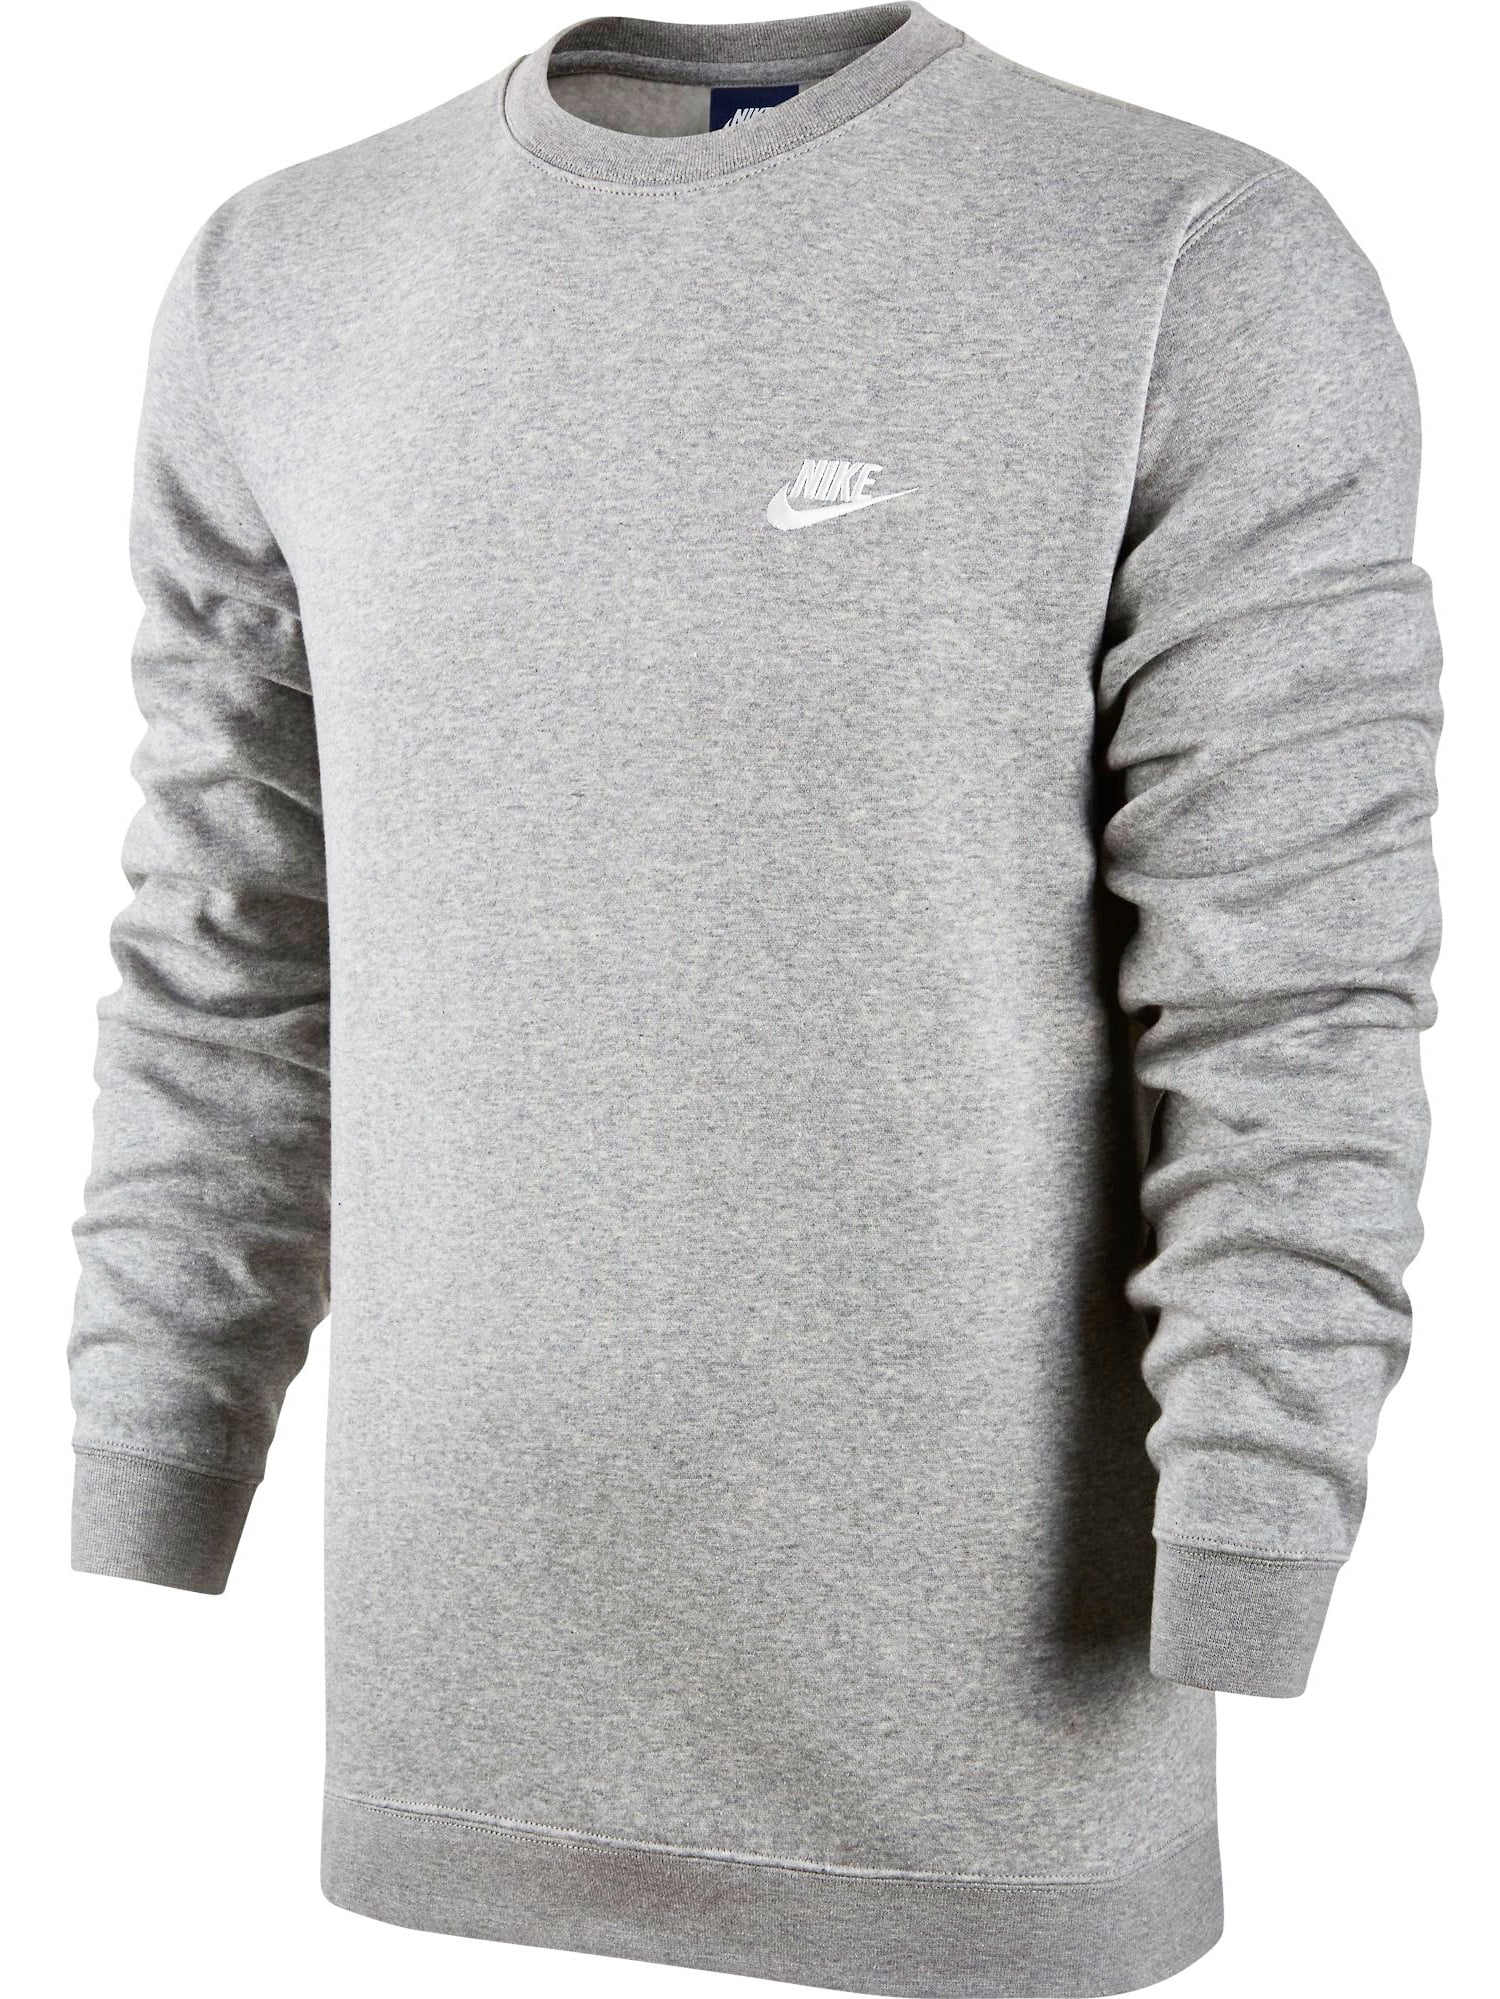 Nike - Nike Men's Dark Grey Heather / White Sportswear Crew Pullover ...